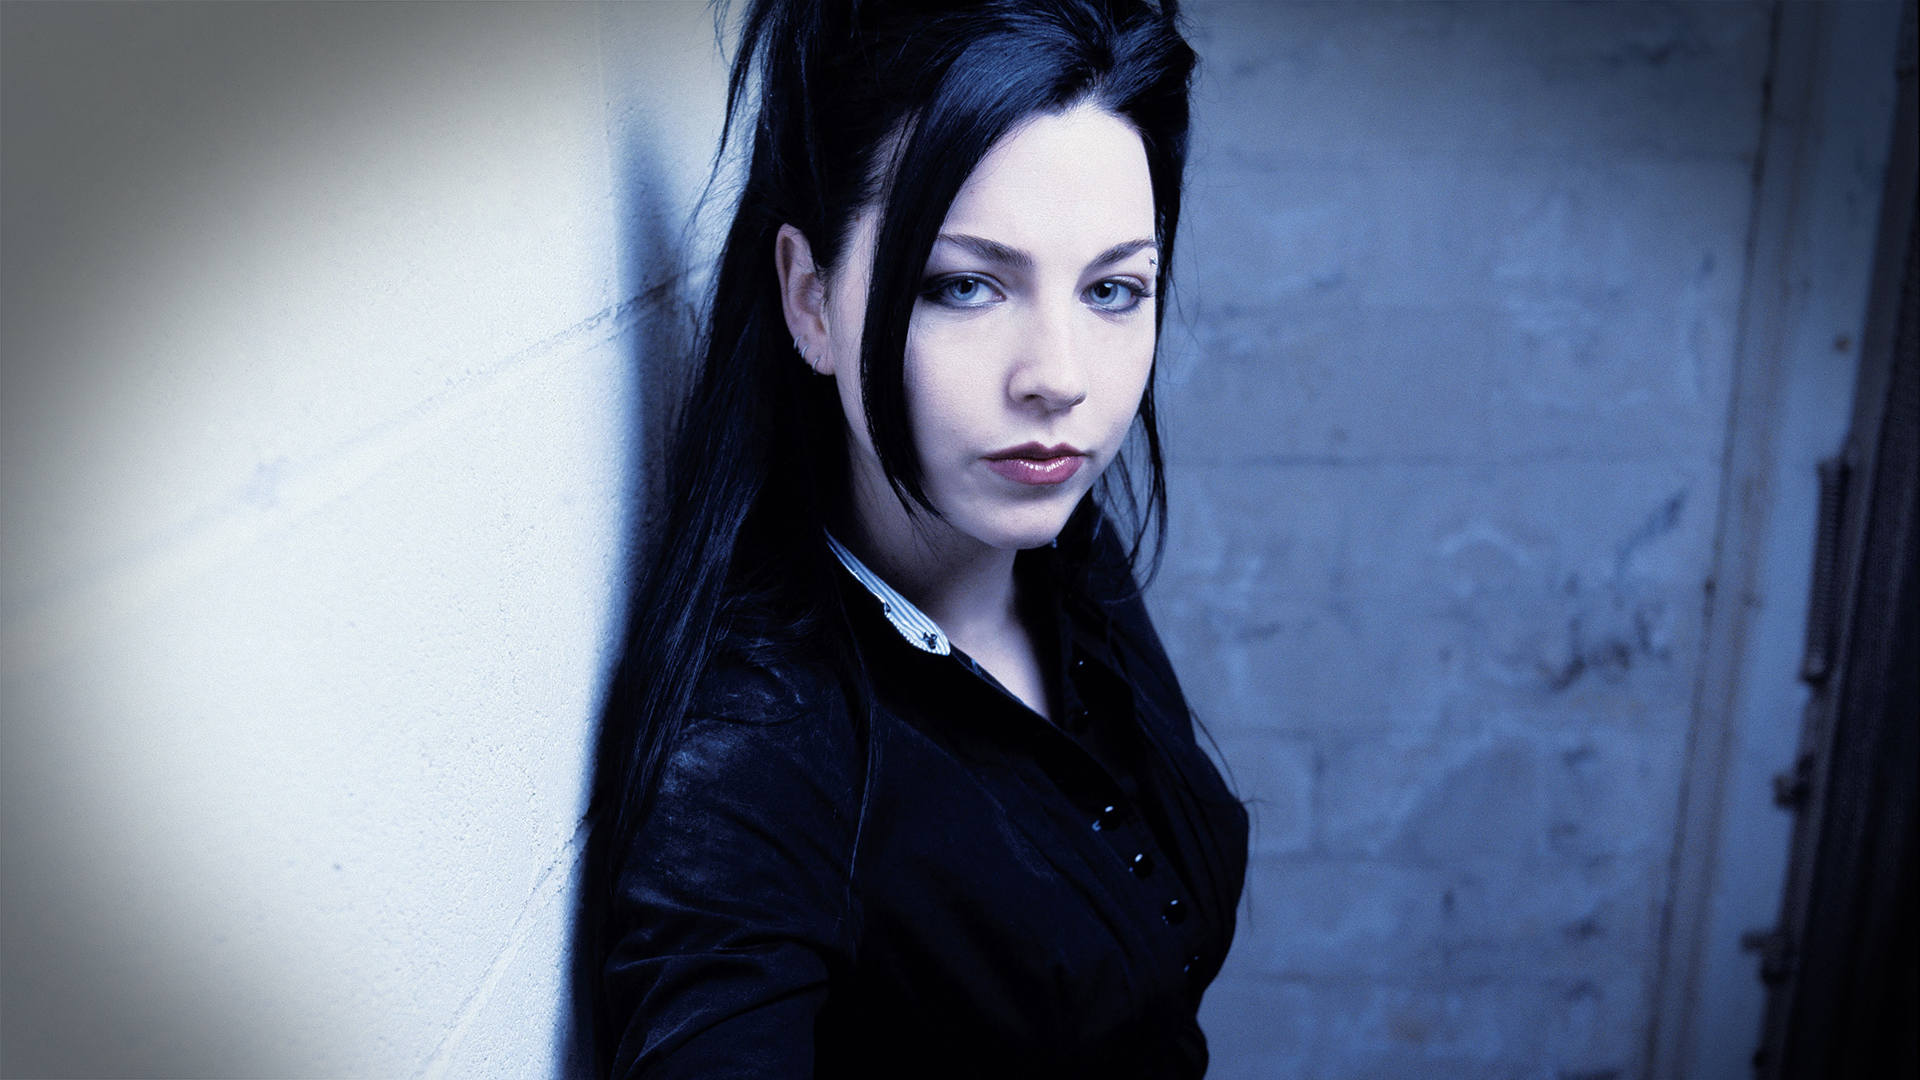 Amy Lee Evanescence Singer Musician Hard Rock Women Females Brutes